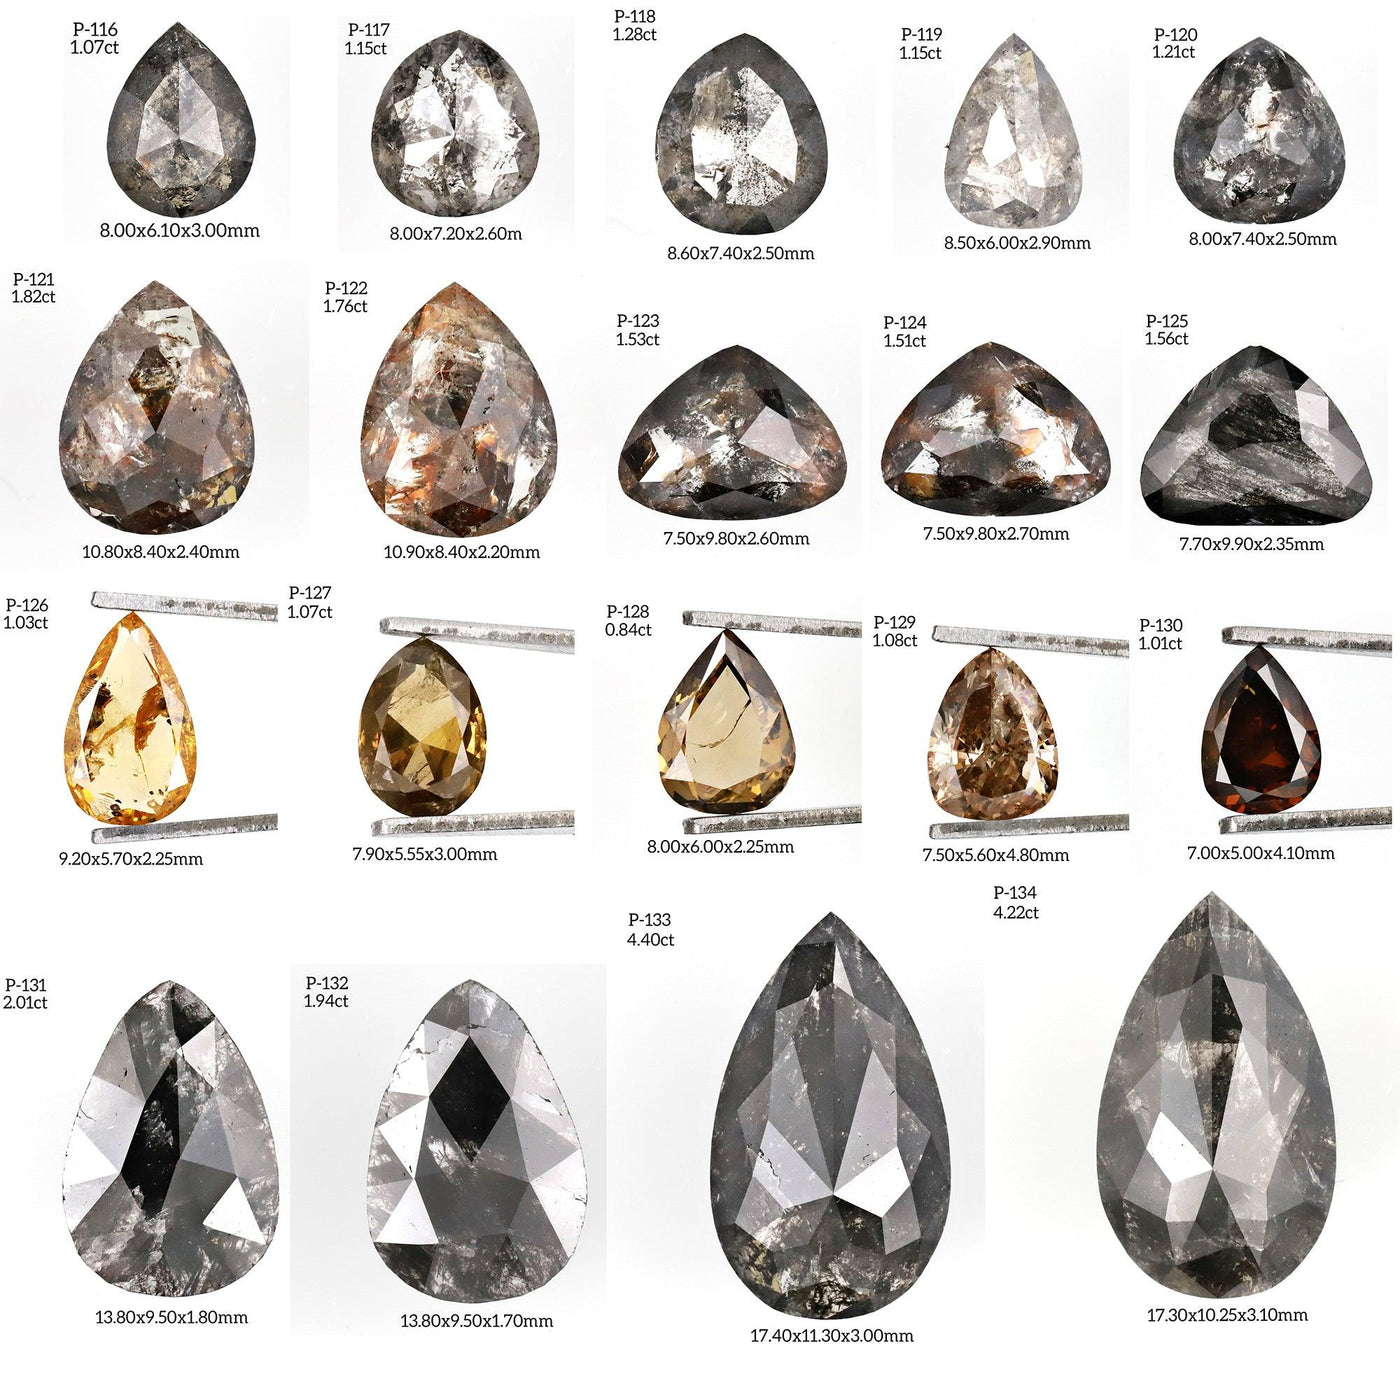 P128 - Salt and pepper pear diamond